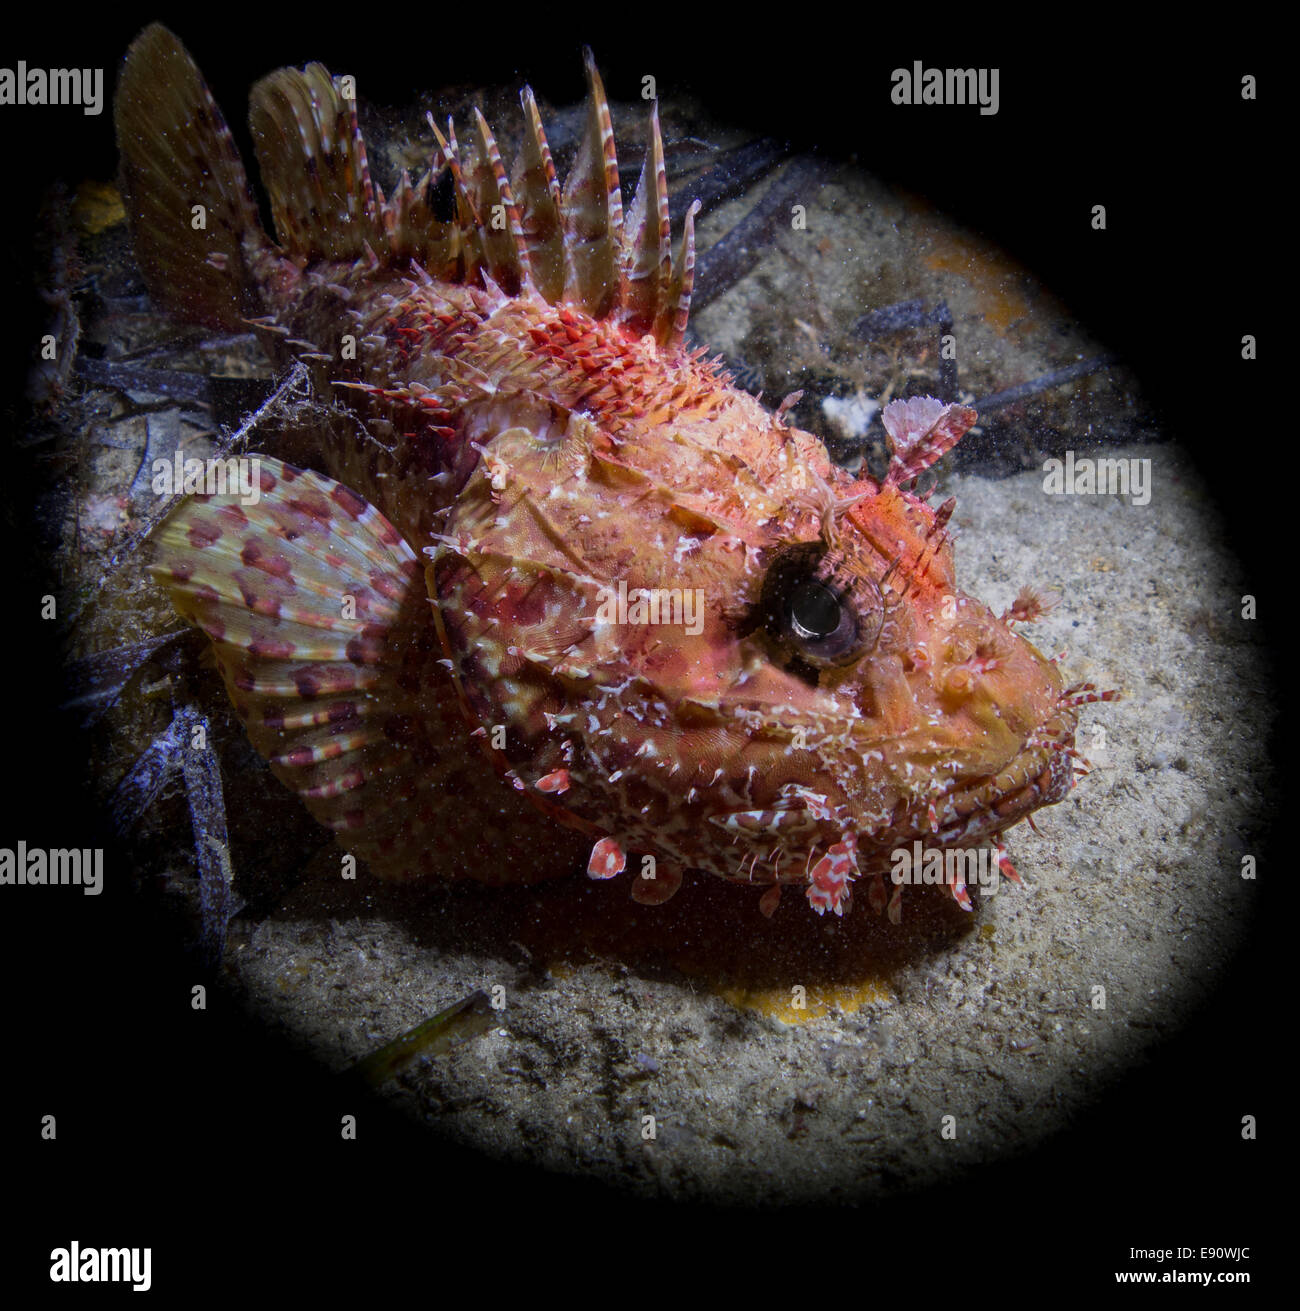 Portrait of a Red Scorpion fish, Scorpaena scrofa,  taken in Malta, Mediterranean Sea. Stock Photo